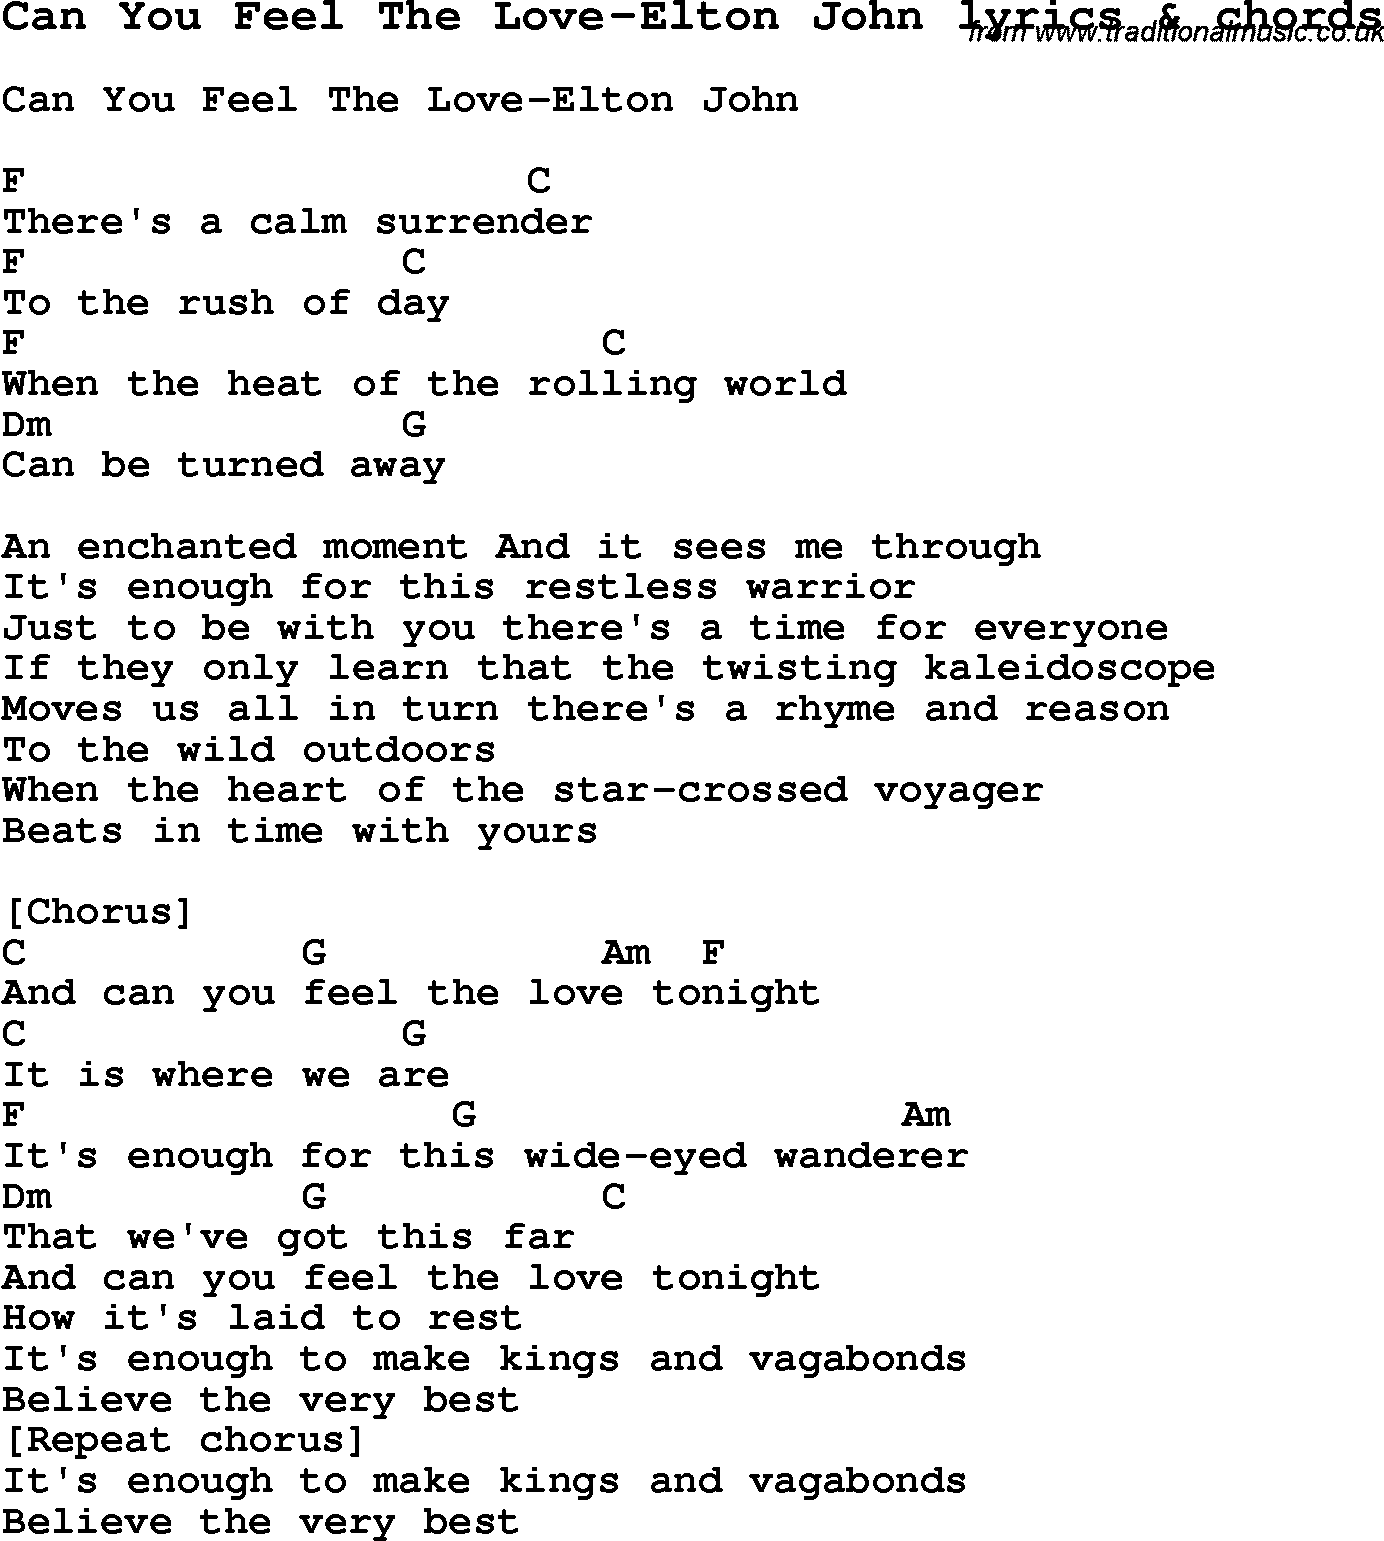 Love Song Lyrics for: Can You Feel The Love-Elton John with chords for Ukulele, Guitar Banjo etc.